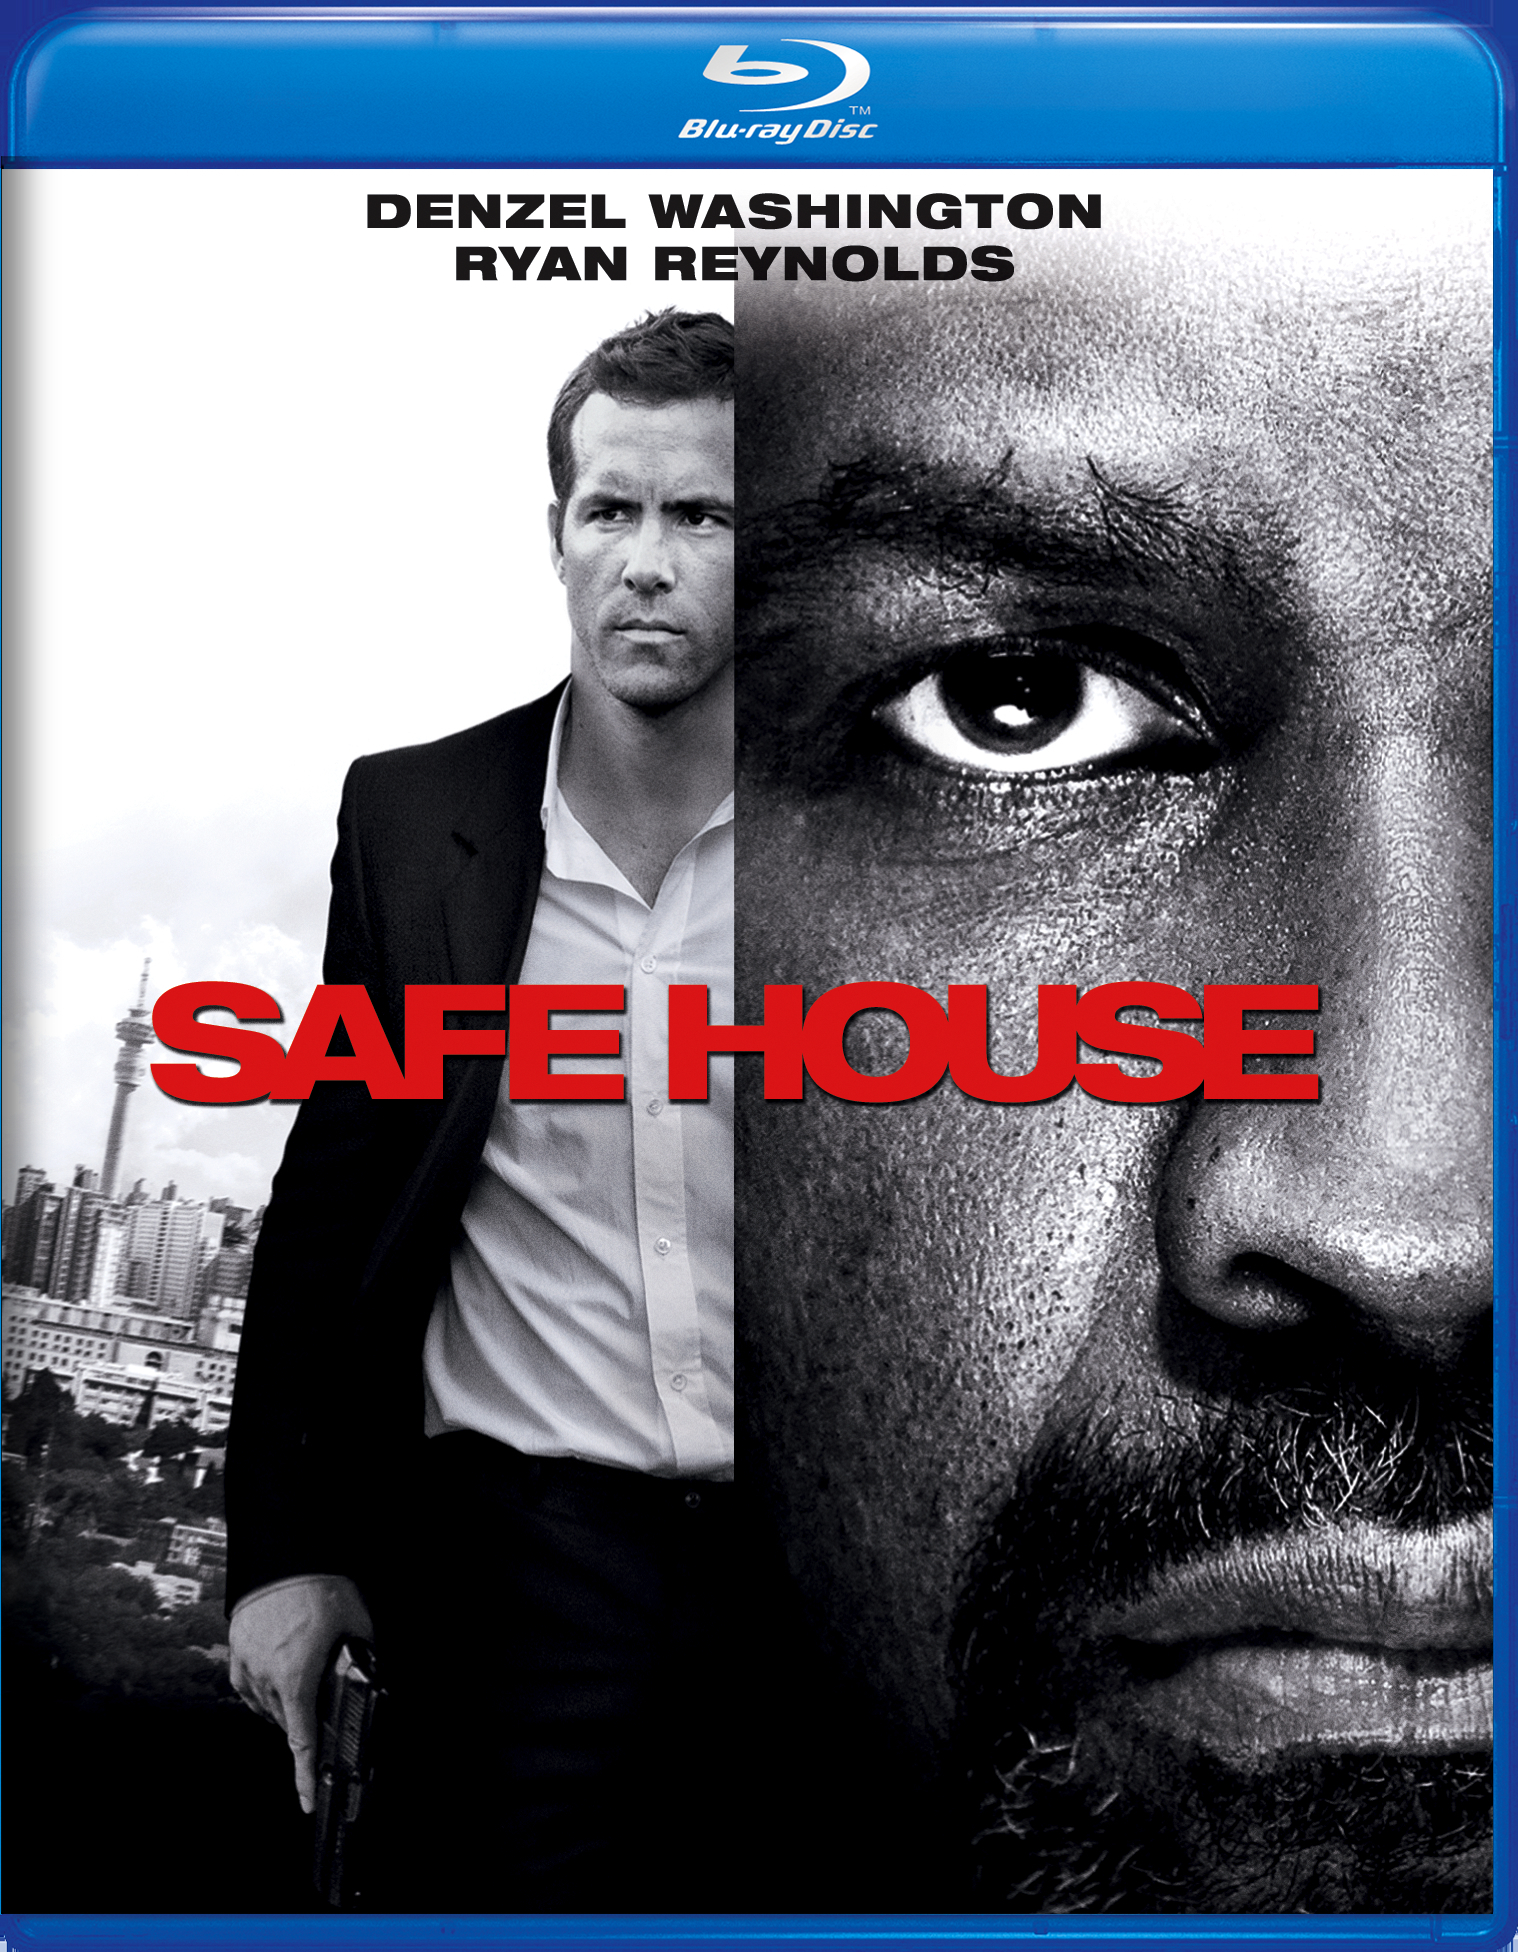 Safe House (Blu-ray New Box Art) - Blu-ray [ 2012 ]  - Thriller Movies On Blu-ray - Movies On GRUV